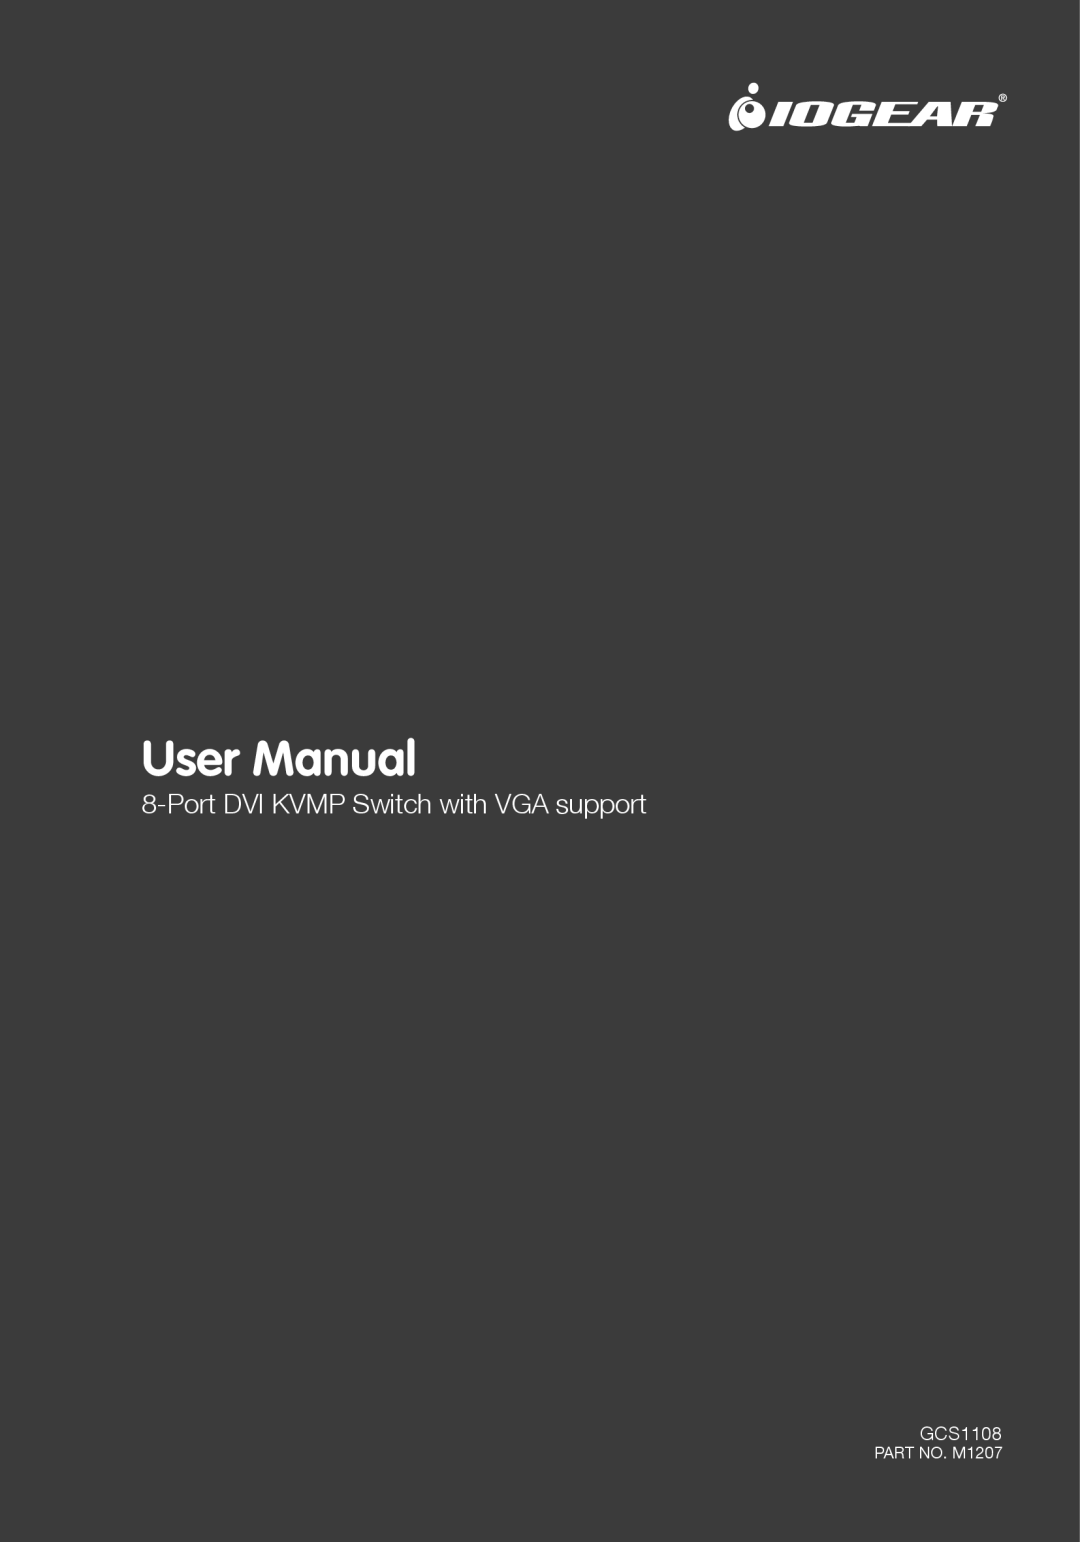 IOGear GCS1108 user manual User Manual, Port DVI KVMP Switch with VGA support, PART NO. M1207 